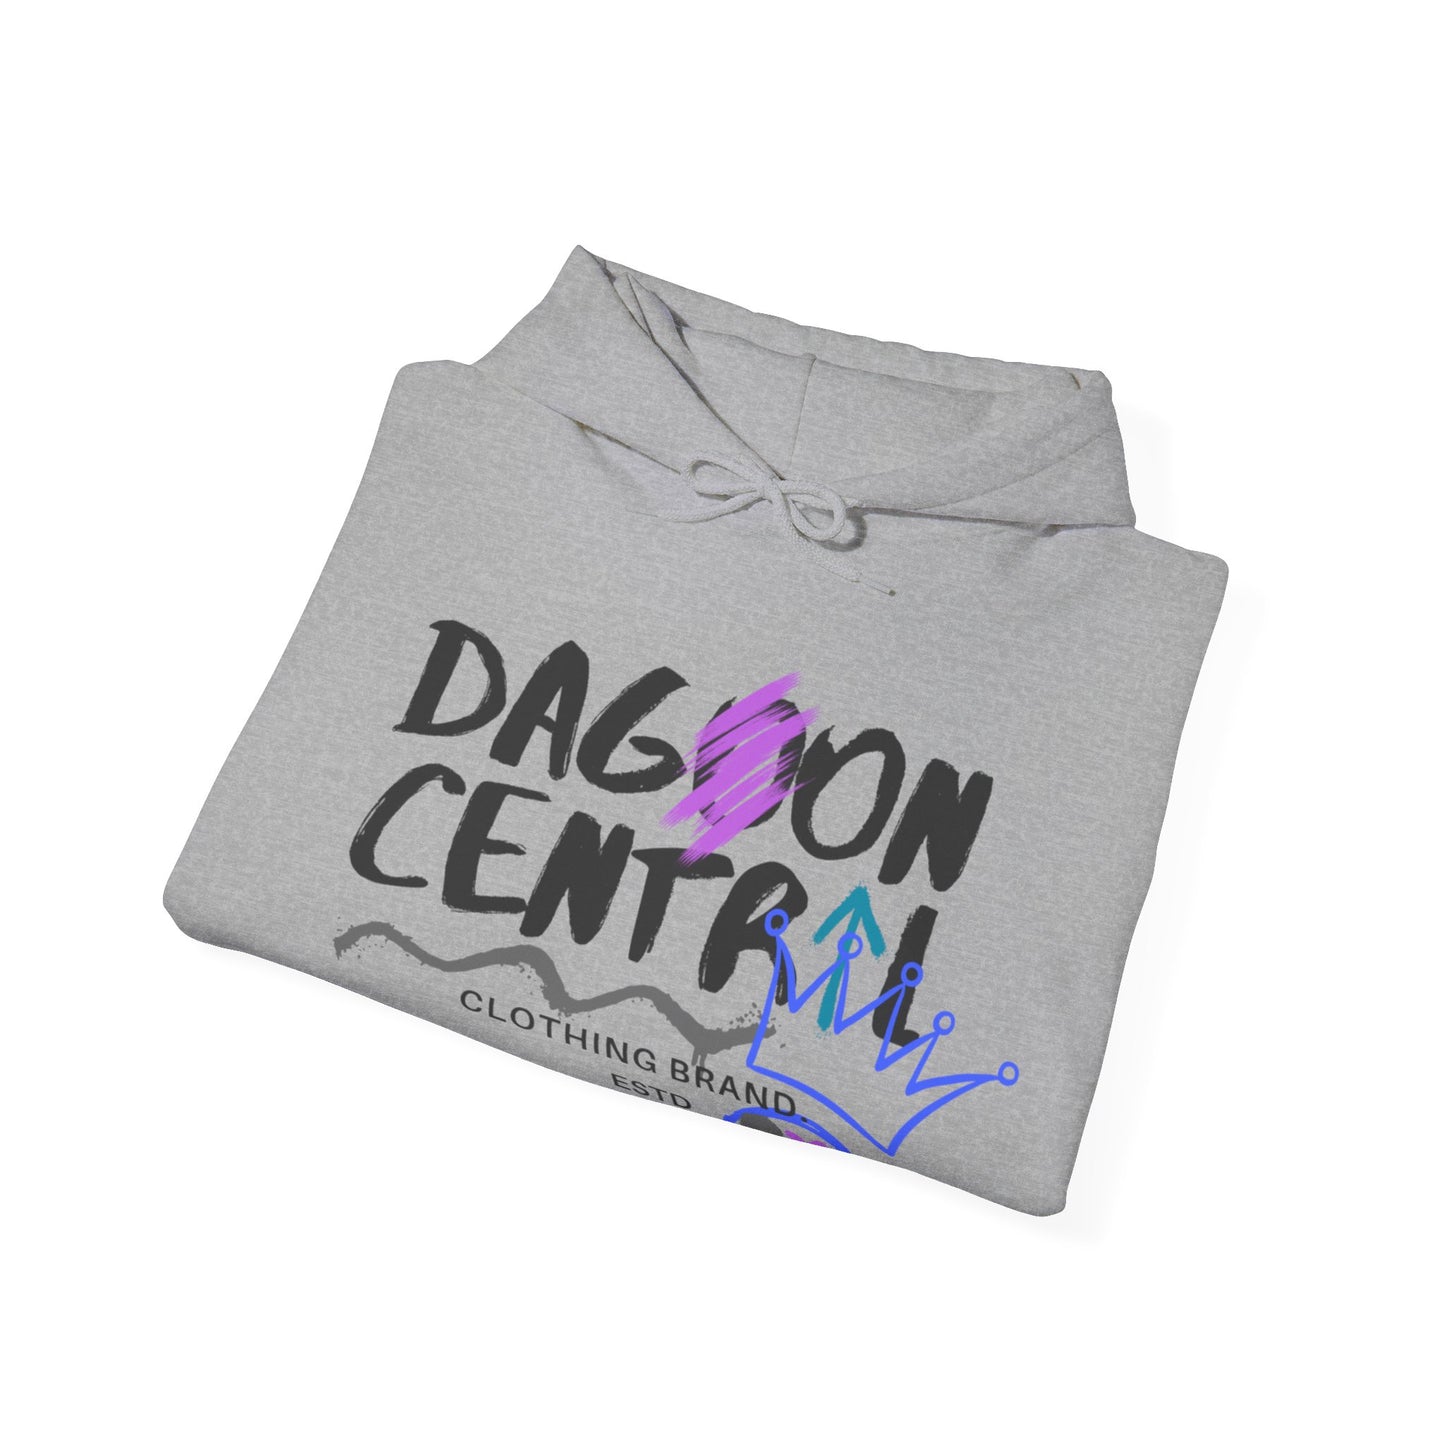 Dagoon Central Graffiti "Blue Faced" Hooded Sweatshirt